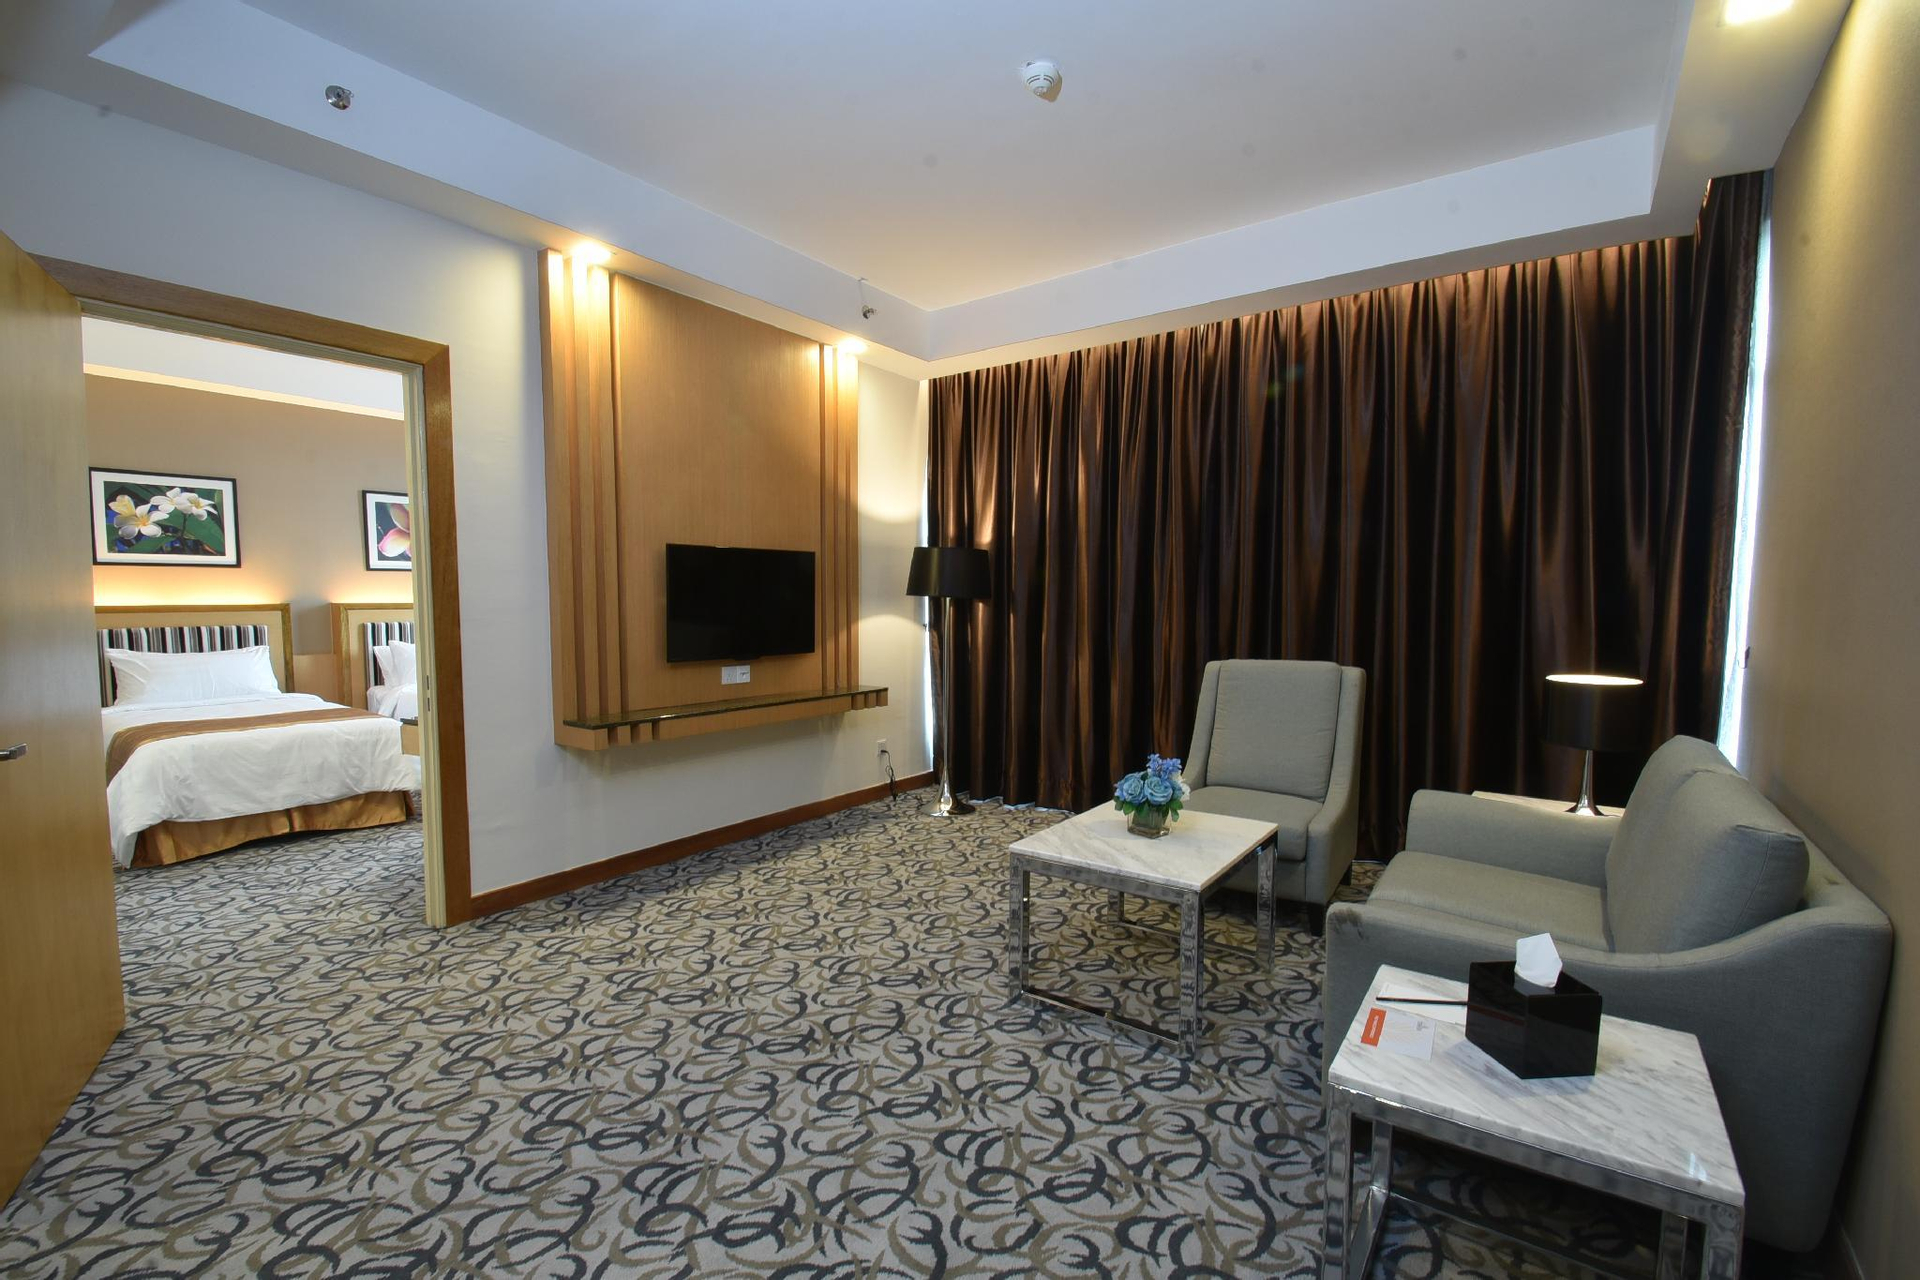 Bedroom 2, Hotel Tenera Bandar Baru Bangi, Hulu Langat